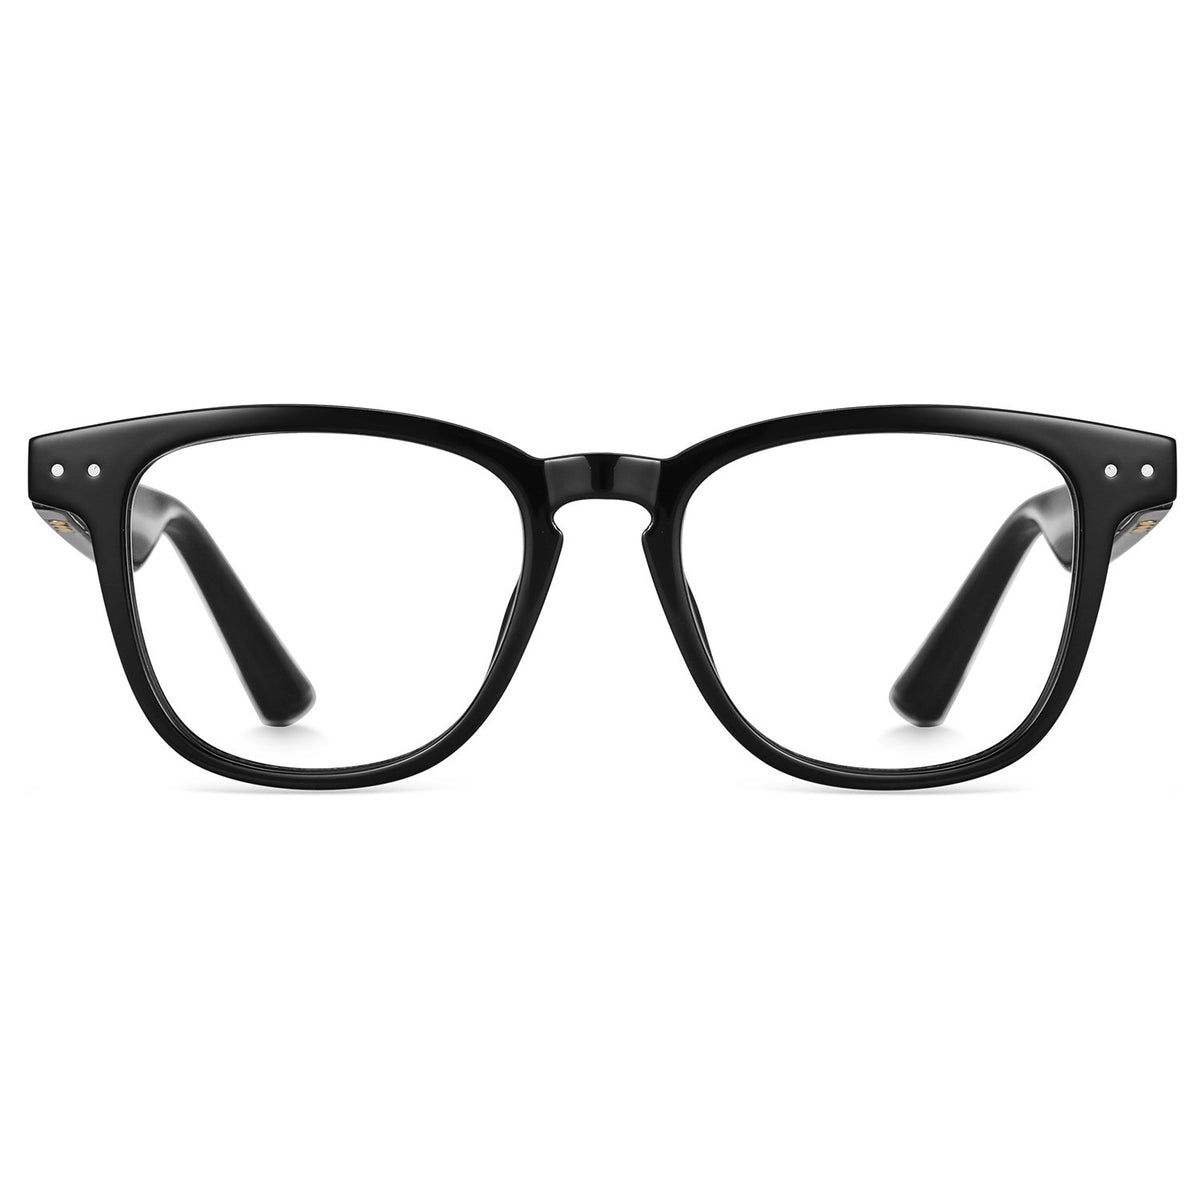 Hoyee Eyes Astrid - Smart Sunglasses